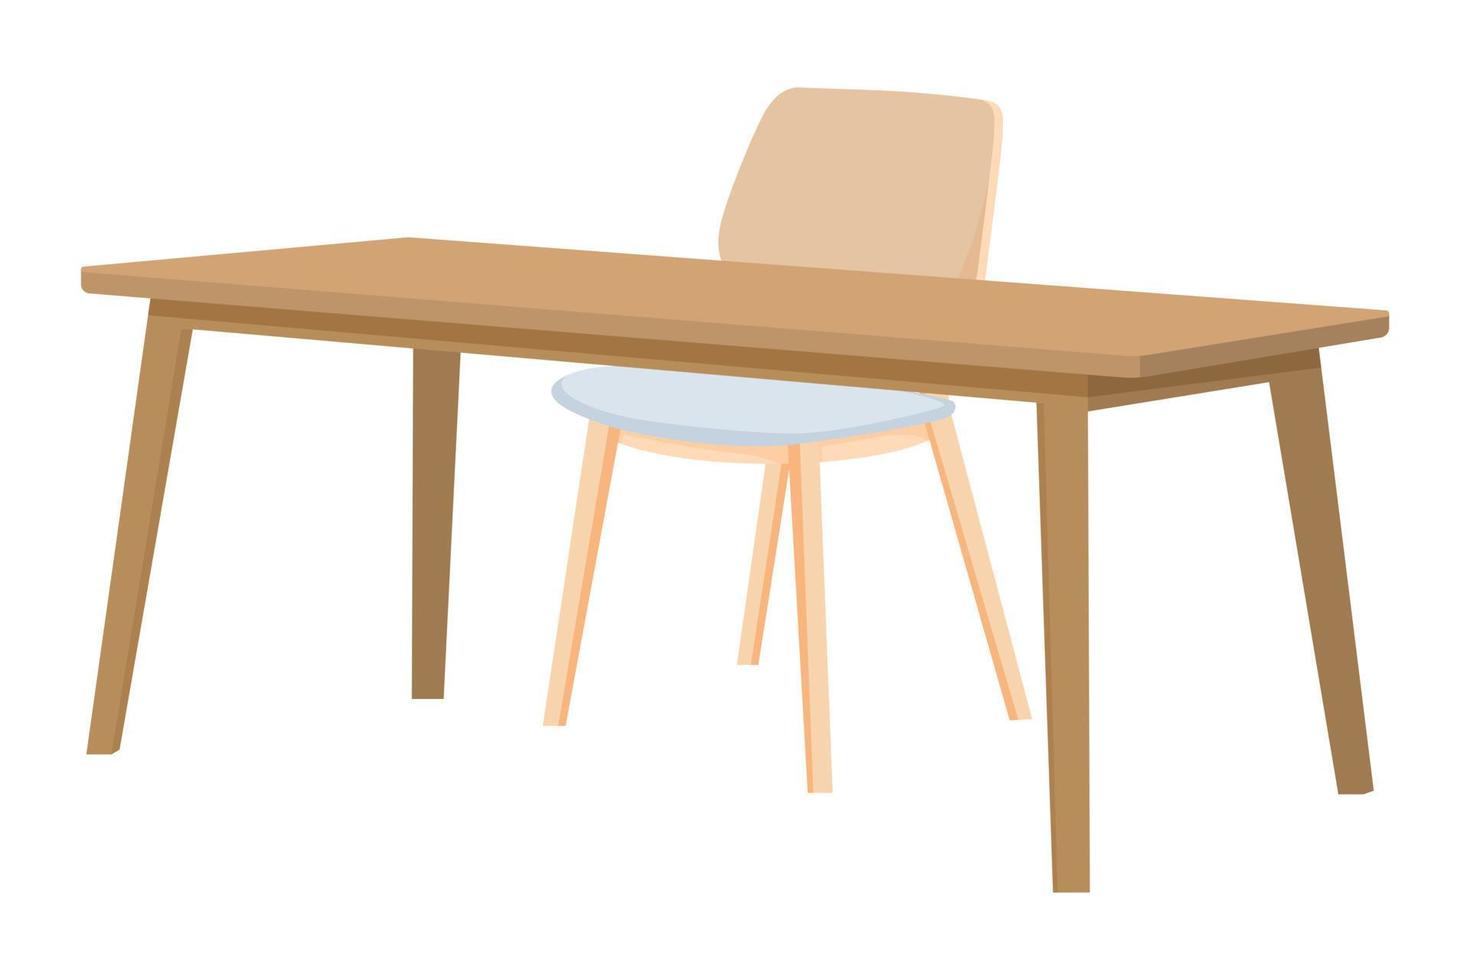 Escritorio con silla de madera moderna y mesa con hermoso diseño con vista 3d aislada vector